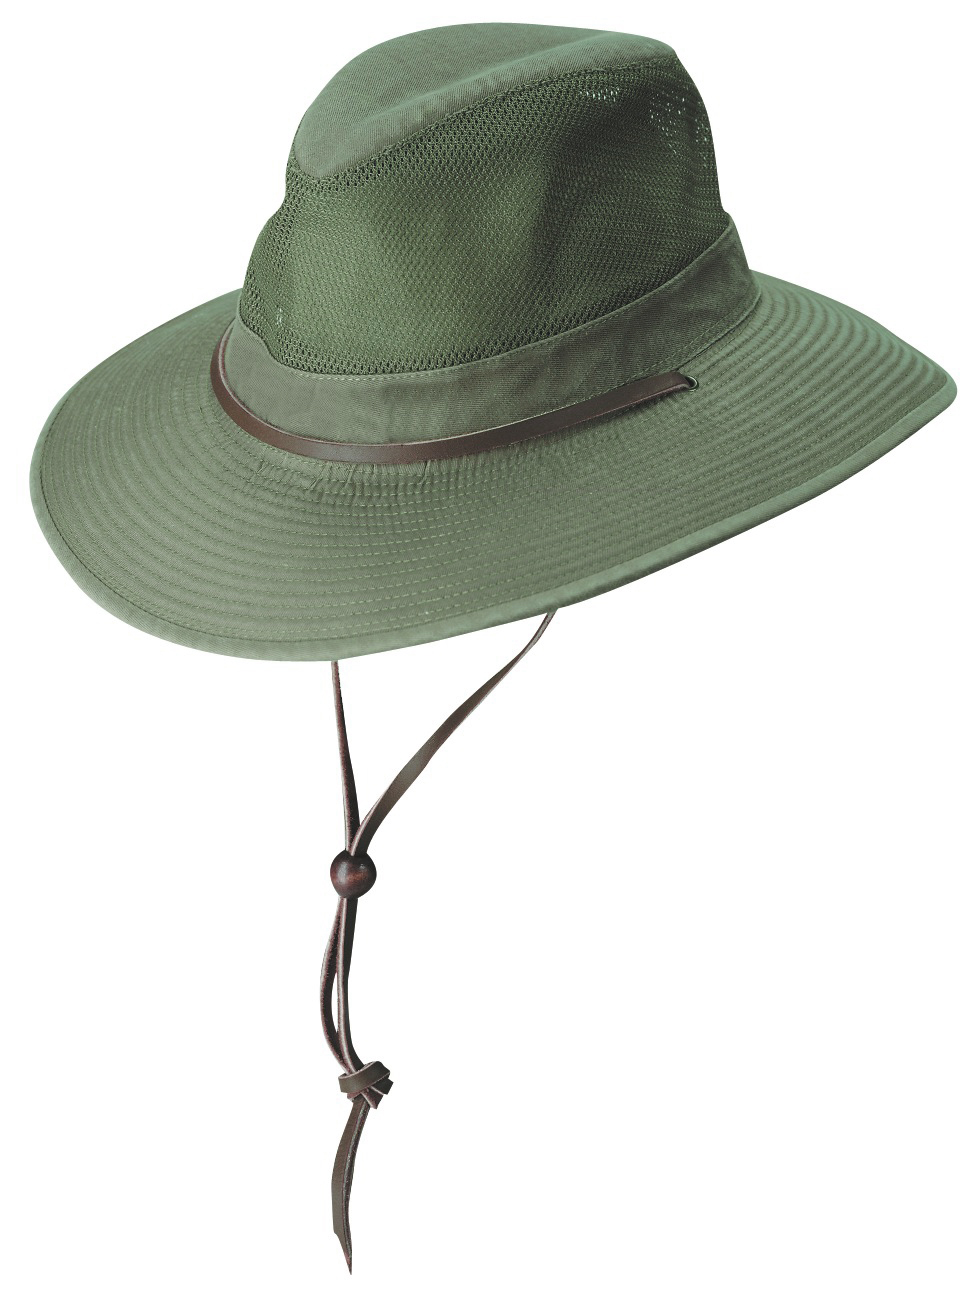 Brushed Twill Safari Hat with Mesh Sidewall - Explorer Hats